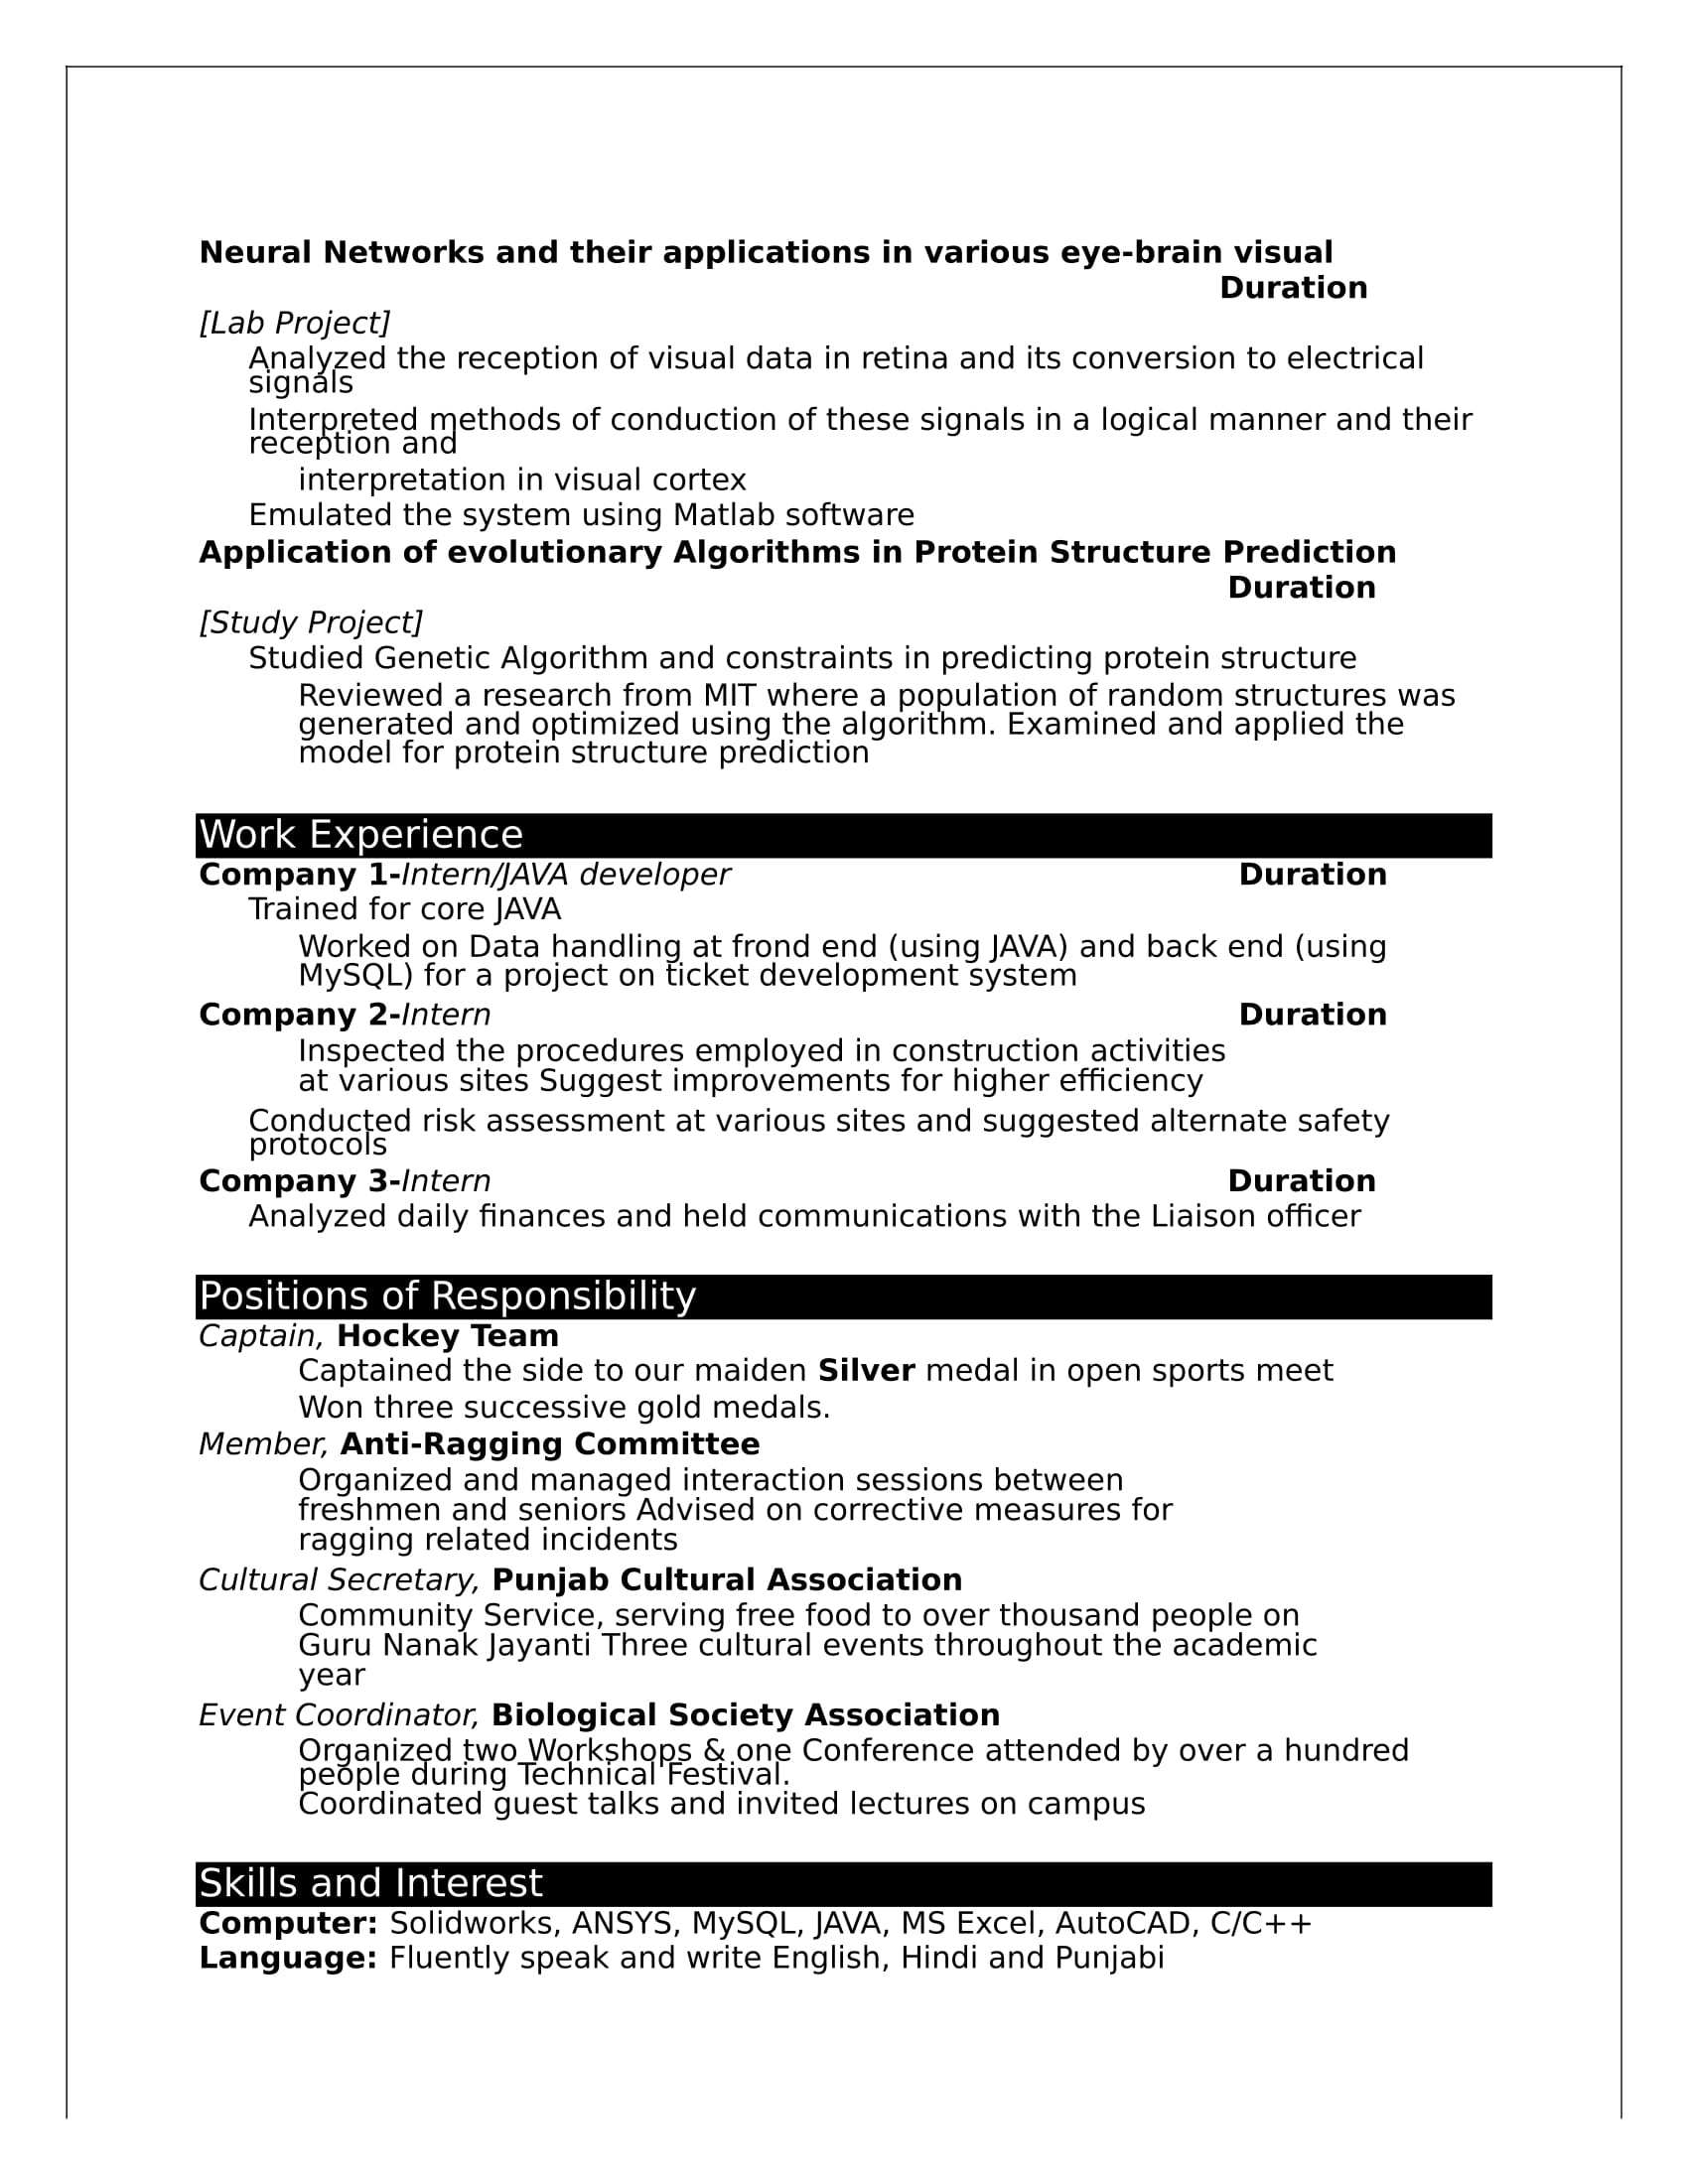 Resume Templates Free Download Aero 3 resume templates free download|wikiresume.com